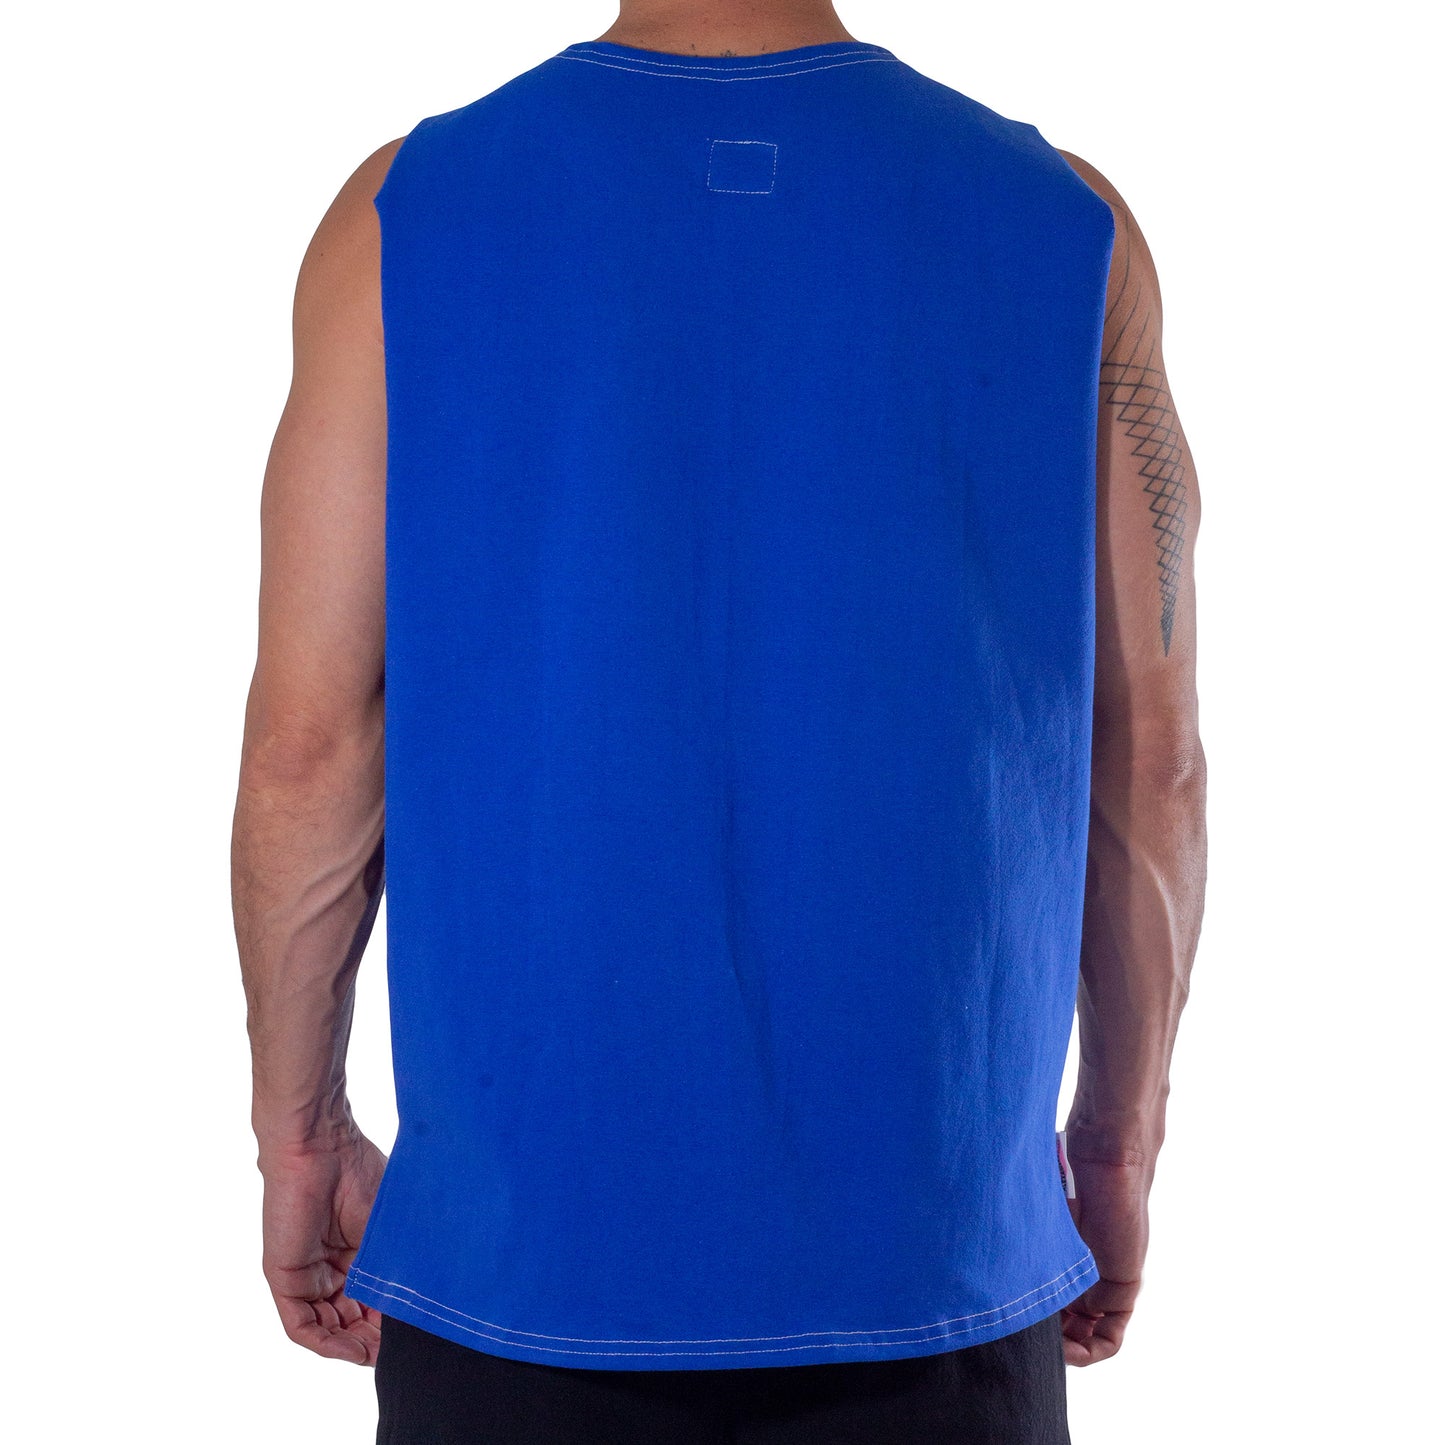 LS0001 LongSleeve playera deportiva suelta Azul Rey Comfort